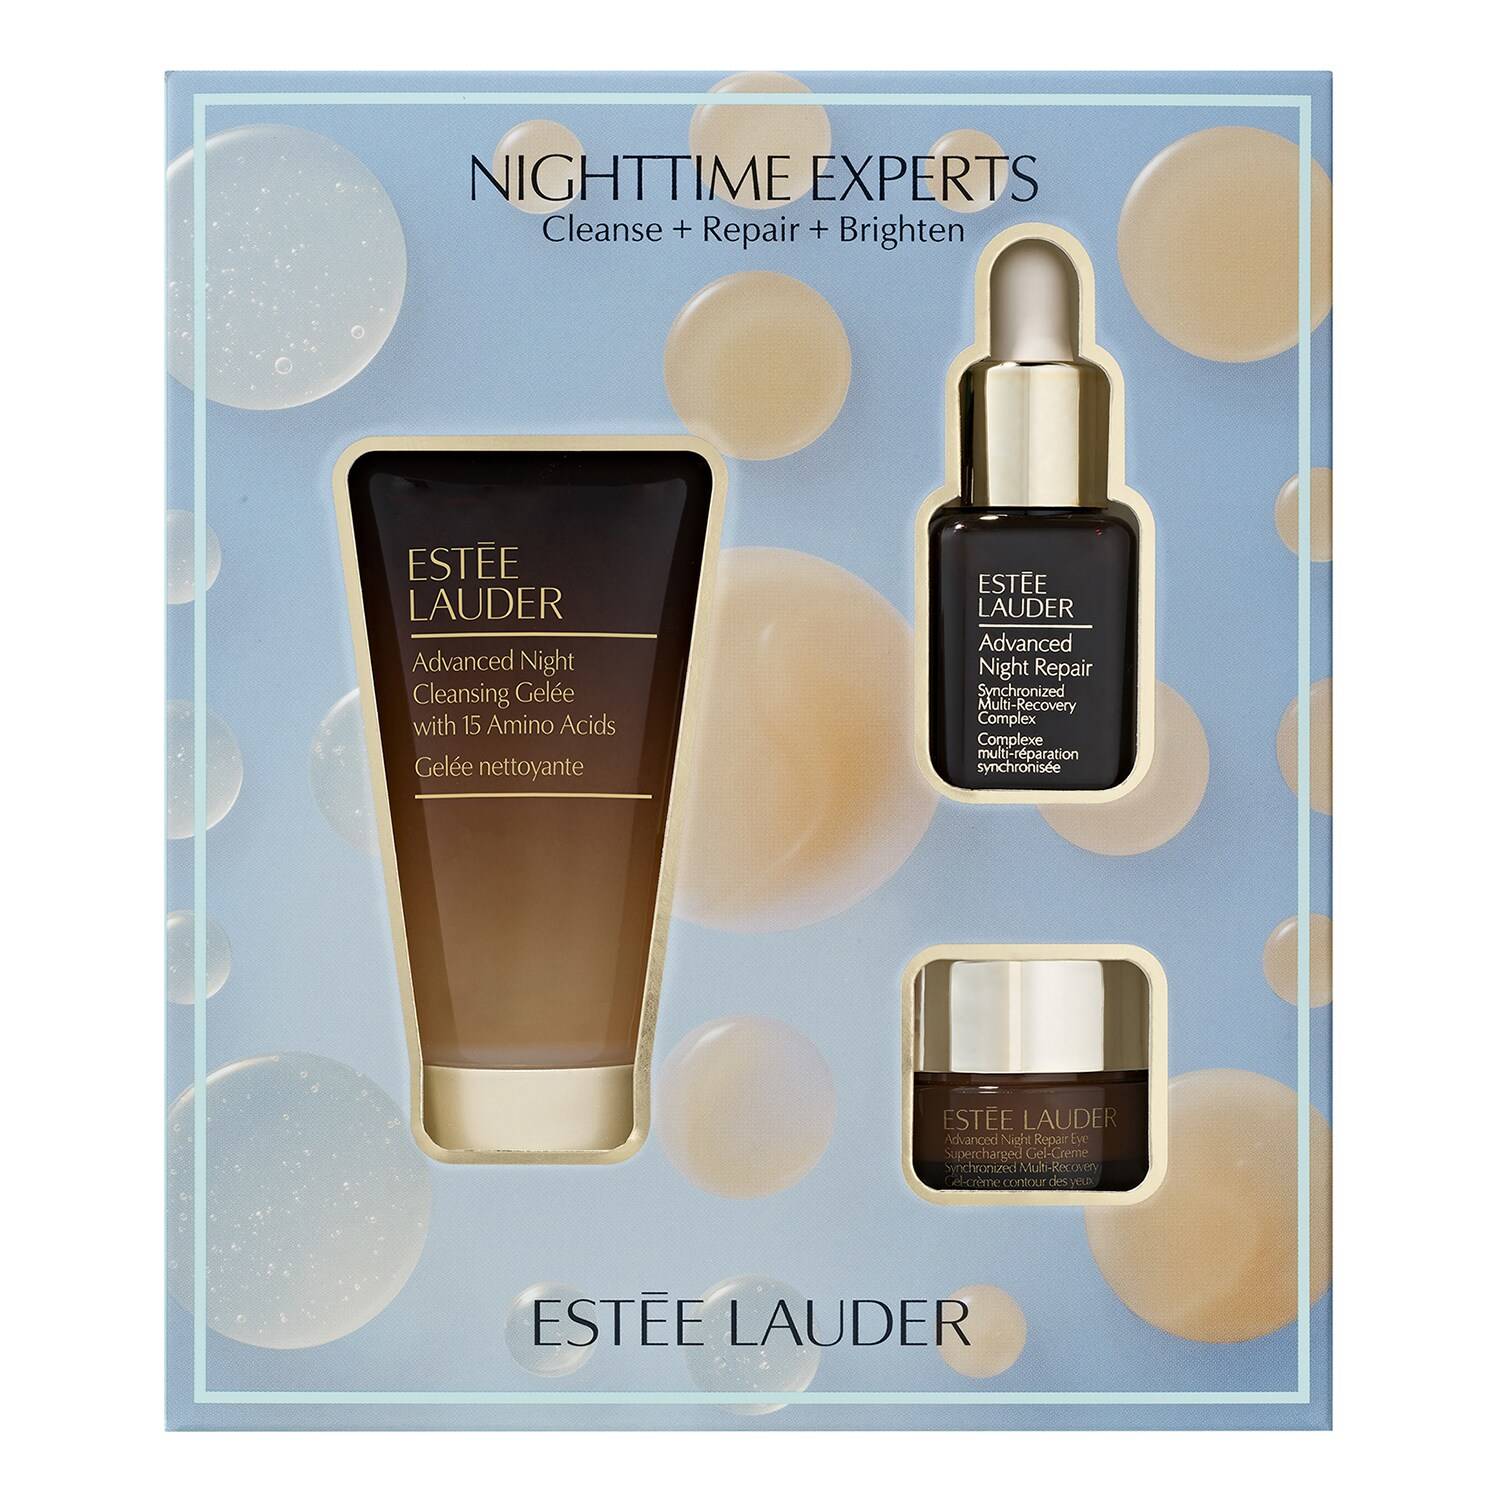 Estee Lauder Nighttime Experts Advanced Night Repair Skincare Gift Set